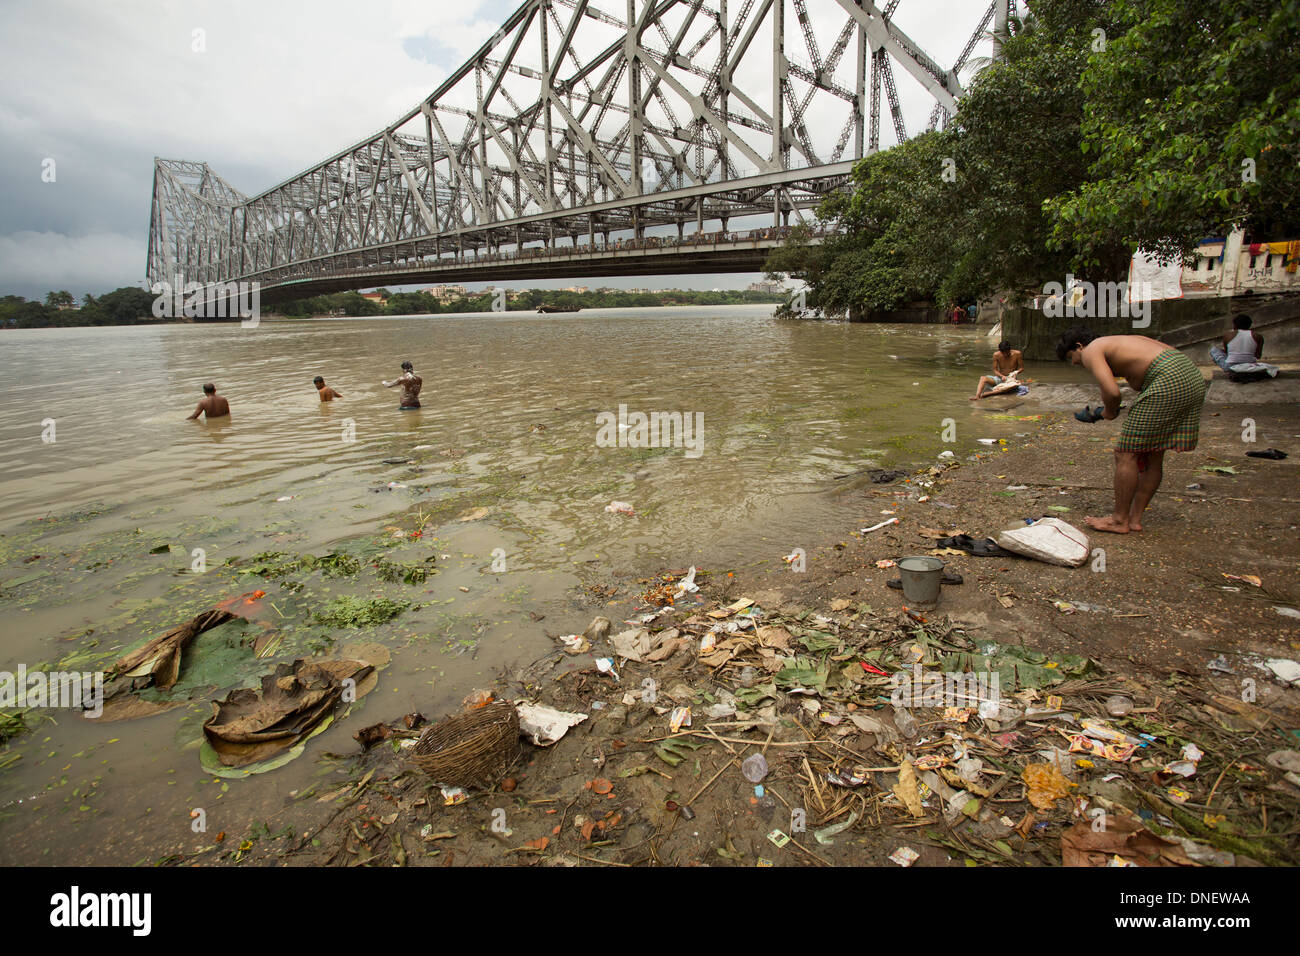 People bathing near the Howrah Bridge - Calcutta (Kolkata), India. Stock Photo